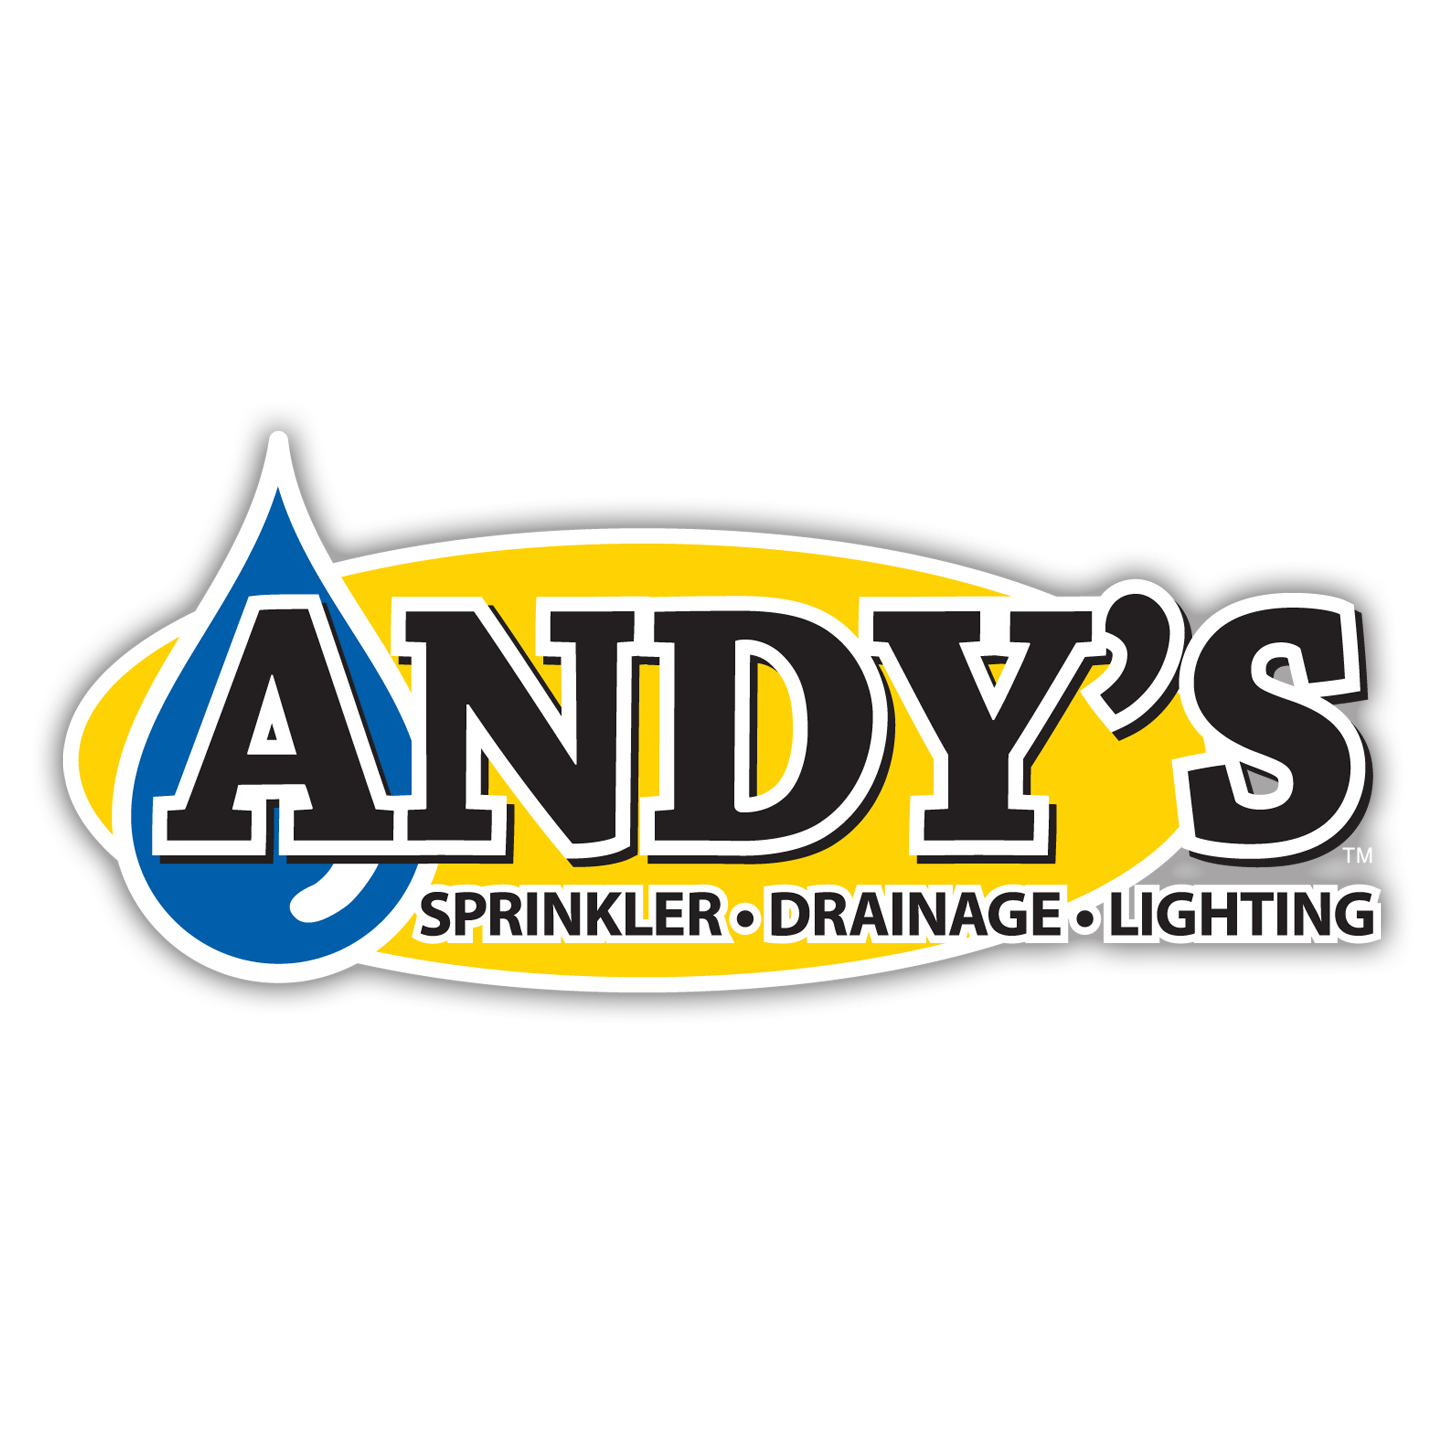 Andy's Sprinkler, Drainage & Lighting - San Antonio, TX 78212 - (888)803-1103 | ShowMeLocal.com